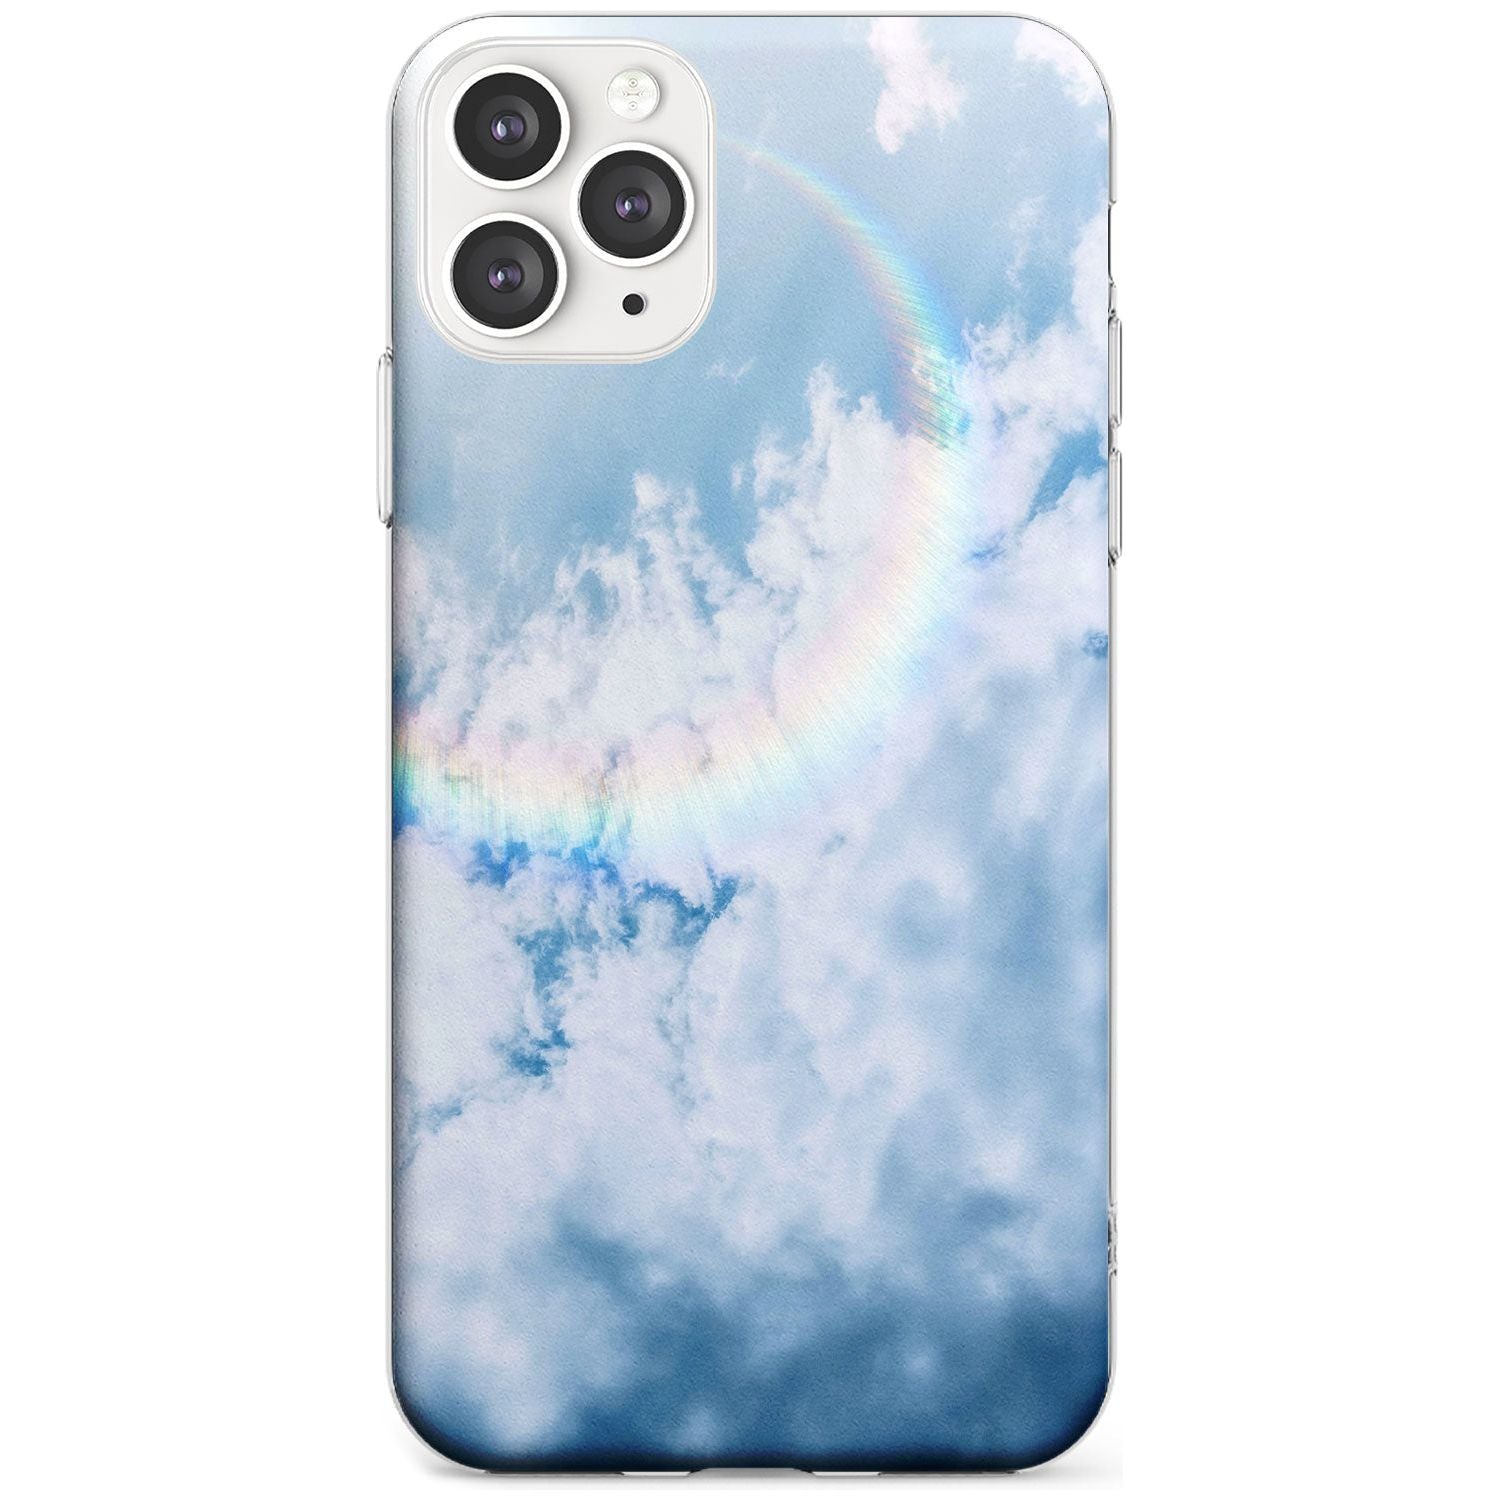 Rainbow Light Flare Photograph Slim TPU Phone Case for iPhone 11 Pro Max